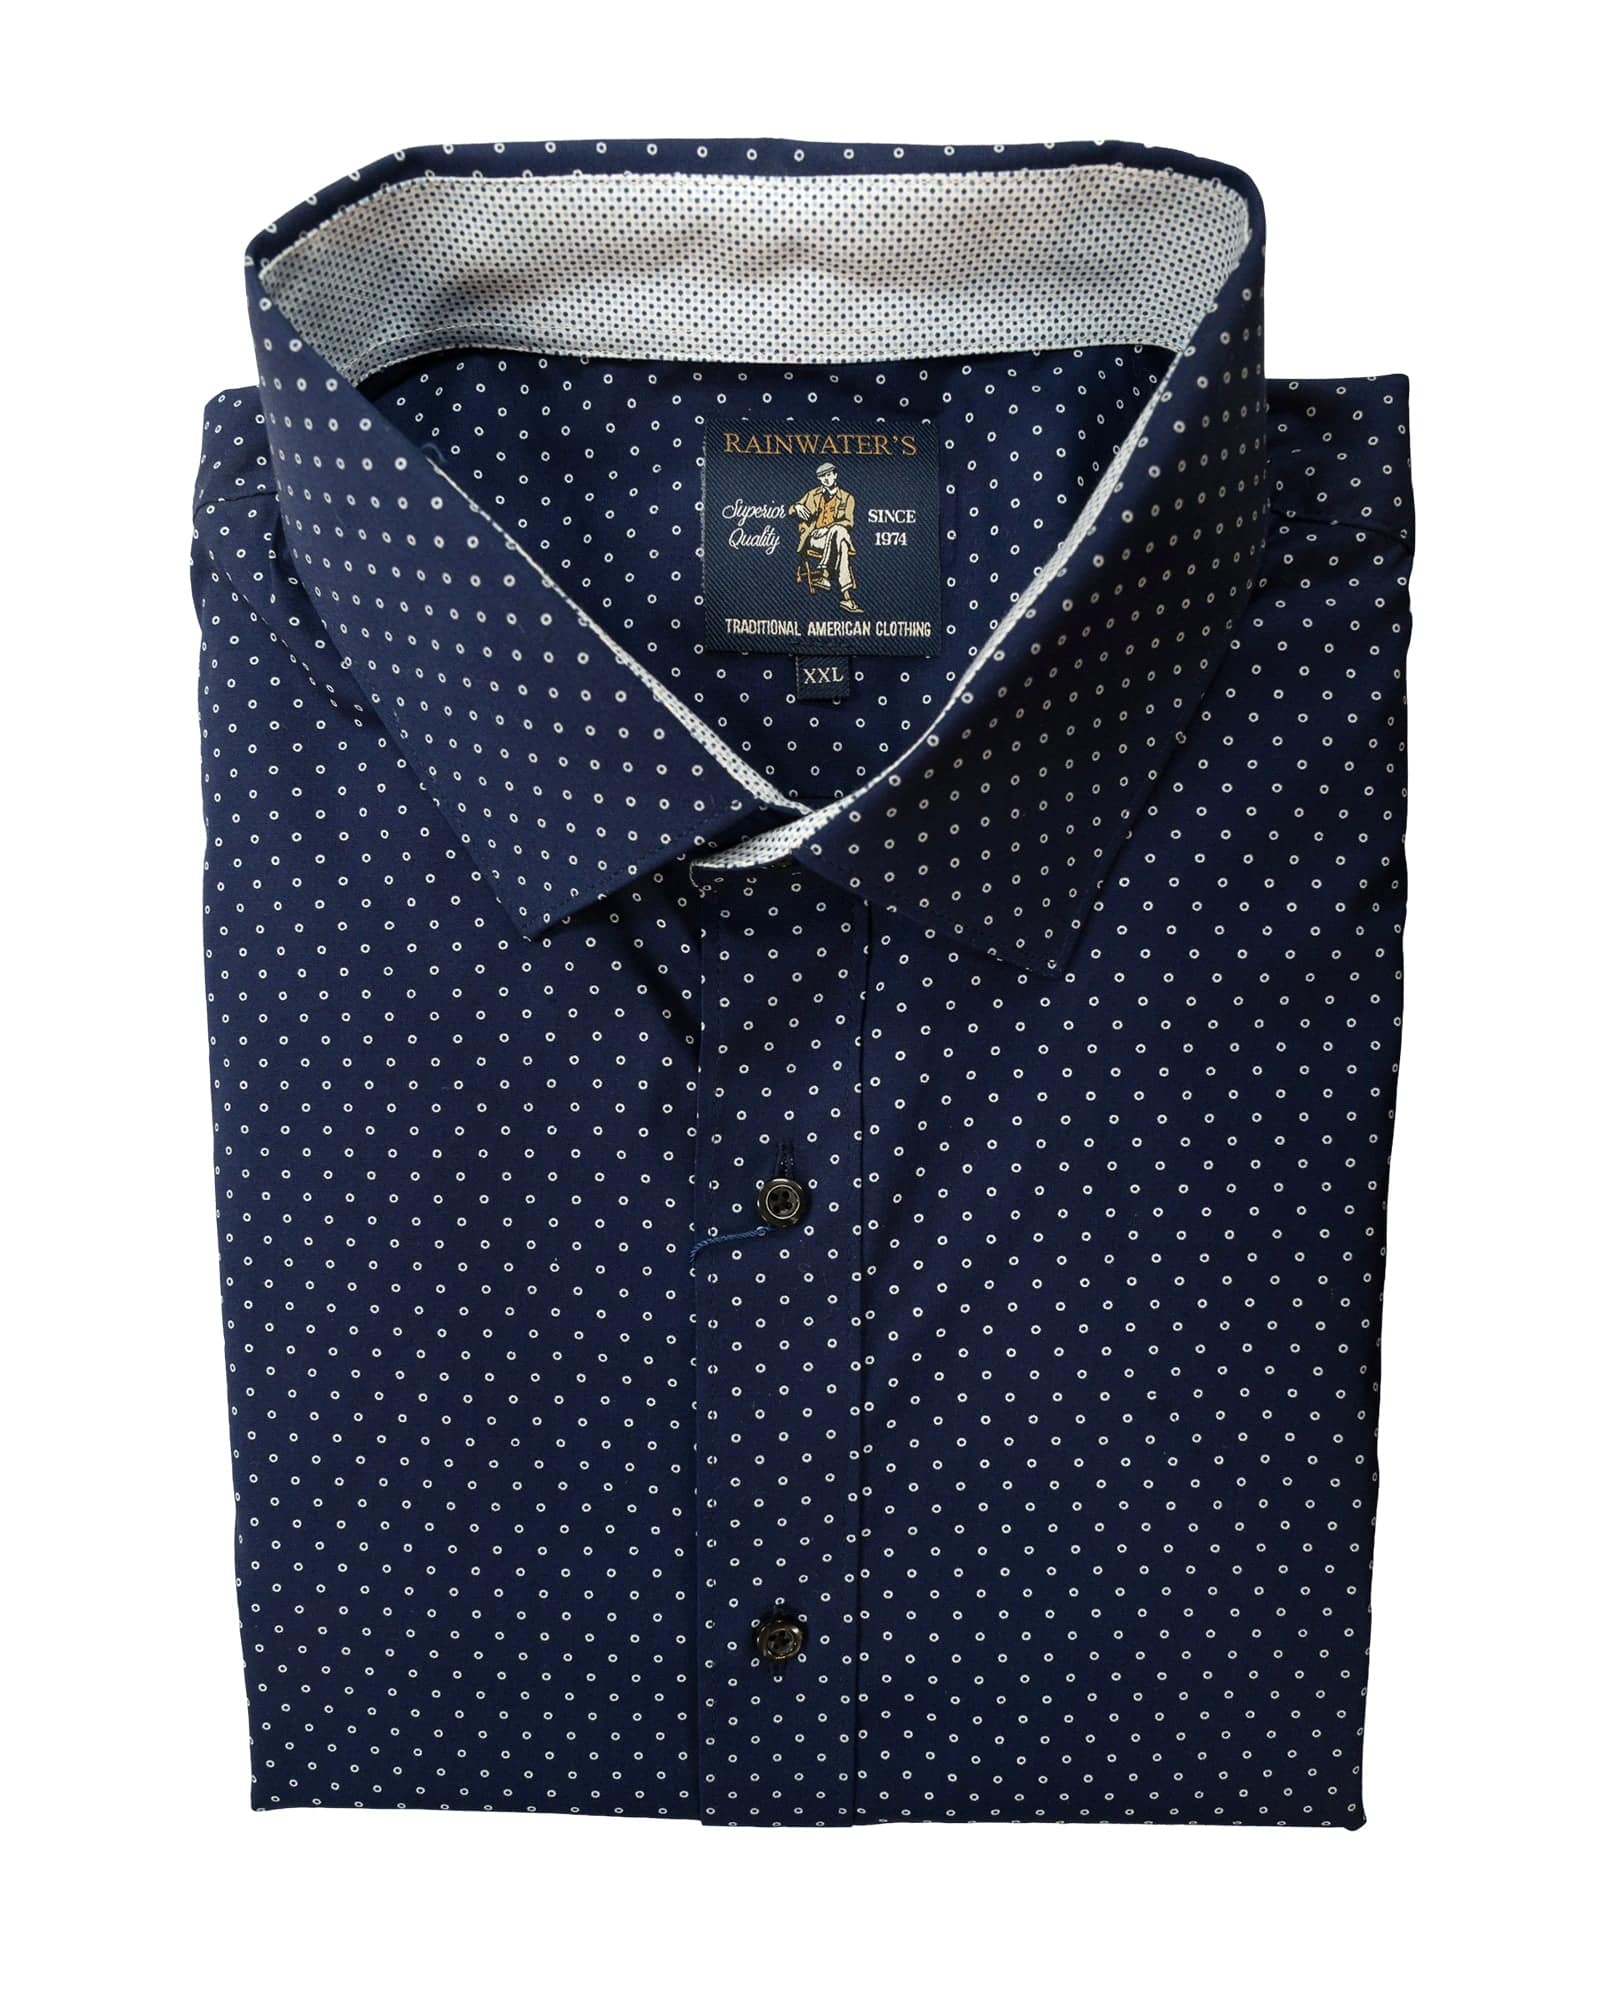 Navy Circle Dot Print in Stretch Cotton Sport Shirt - Rainwater's Men's Clothing and Tuxedo Rental